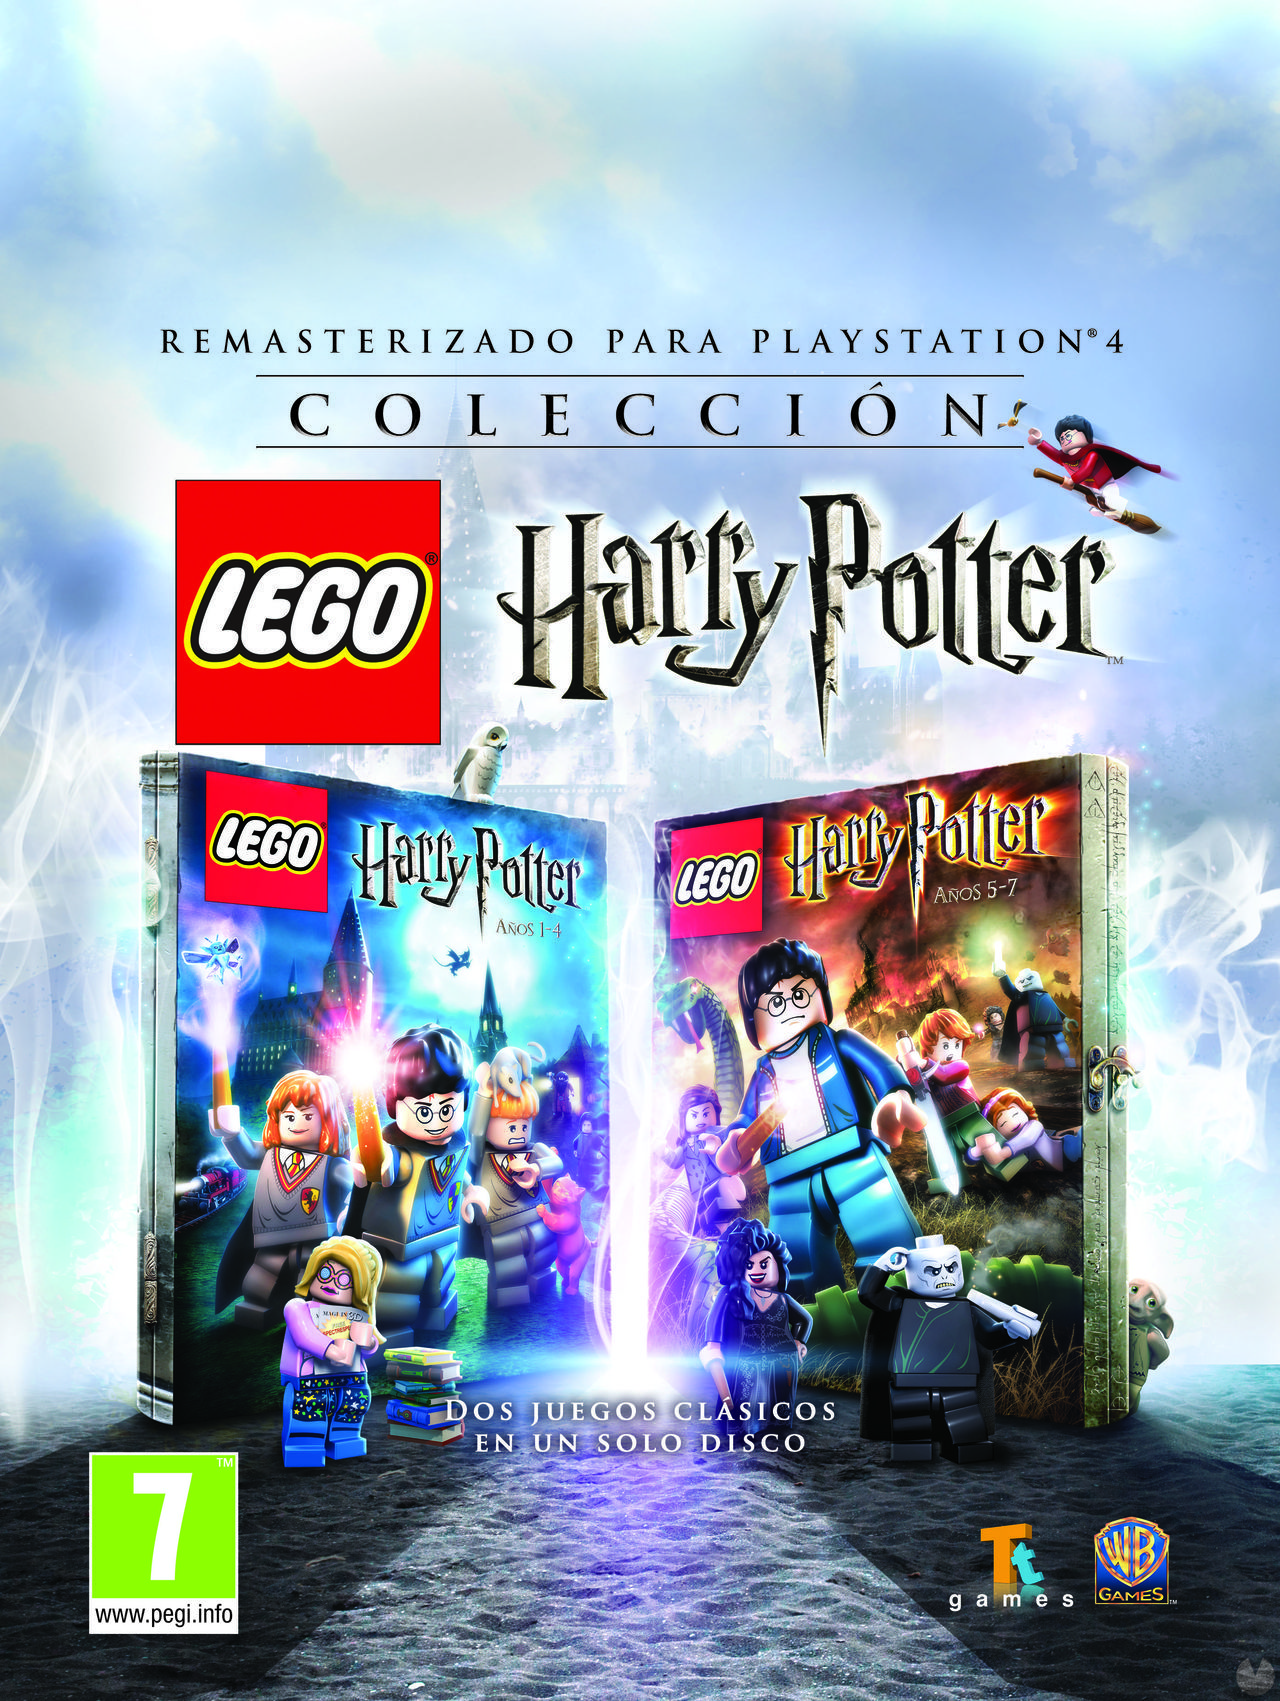 claro visa Comparable Colección LEGO Harry Potter - Videojuego (PS4) - Vandal